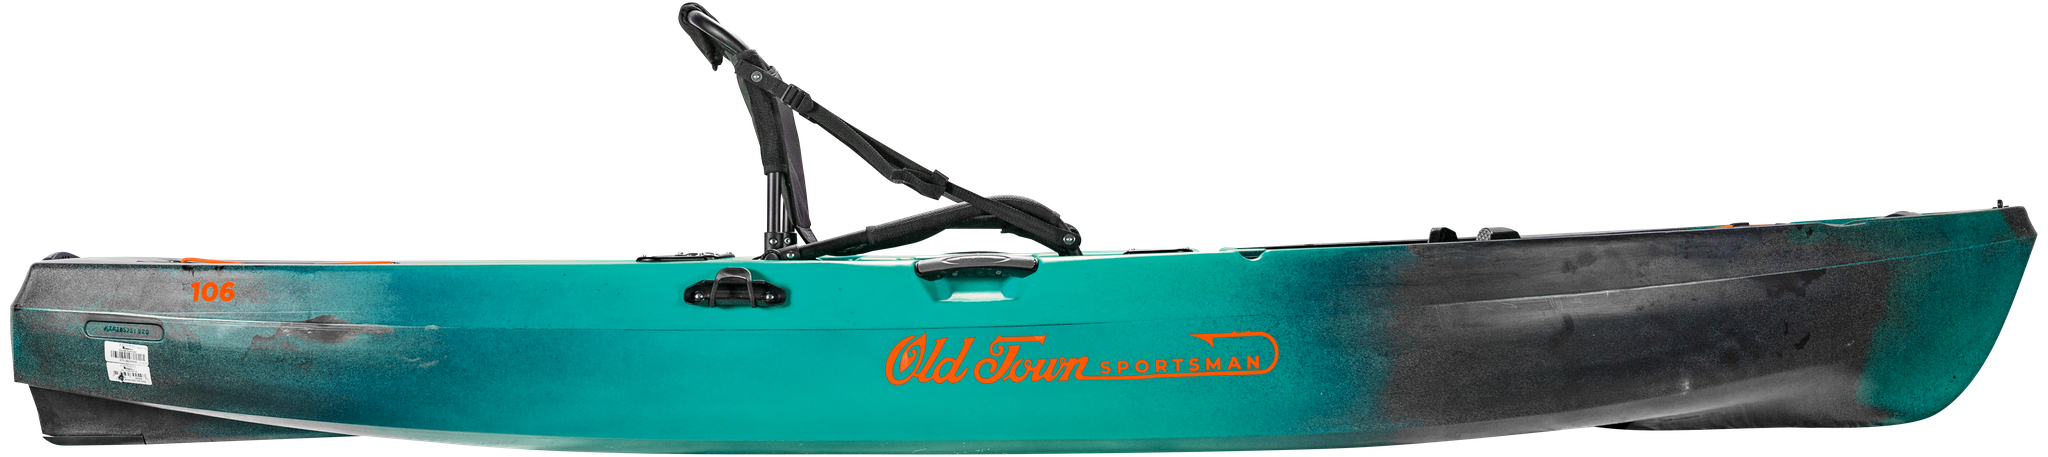 Old Town Sportsman Sportsman 106 Kayak